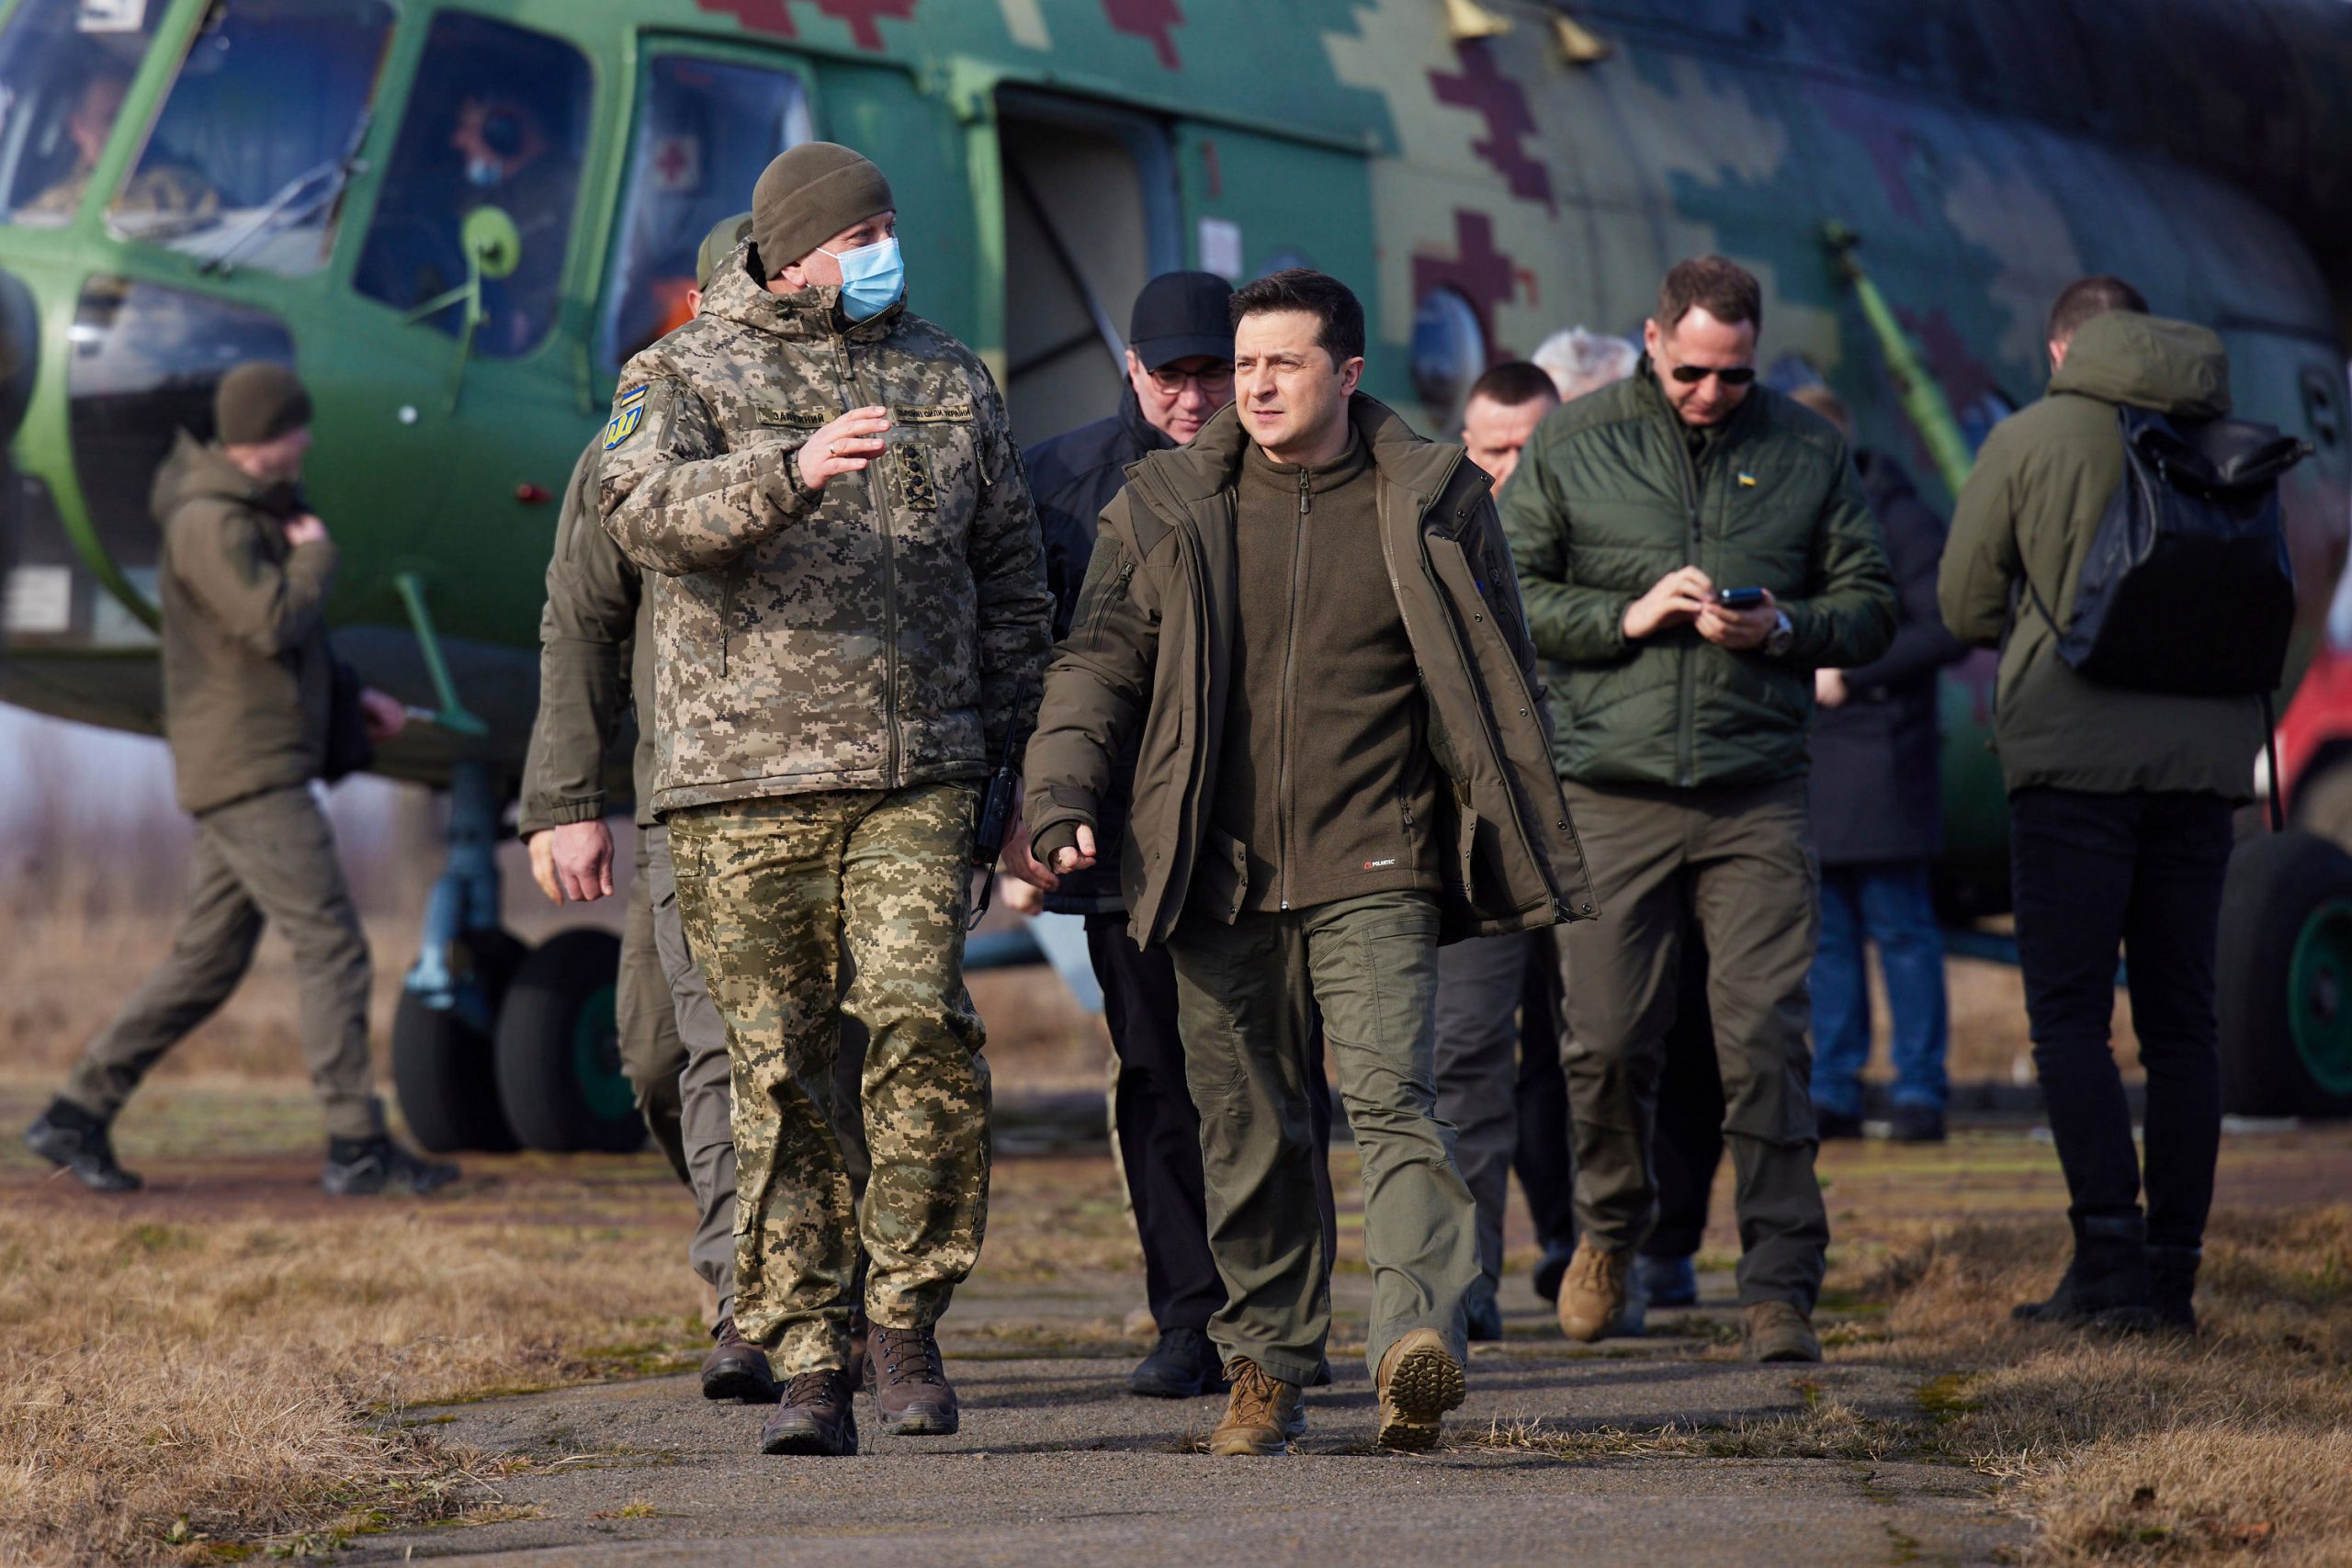 ‘Battle for Donbas’ has begun: Volodymyr Zelensky as Russia focuses on East Ukraine